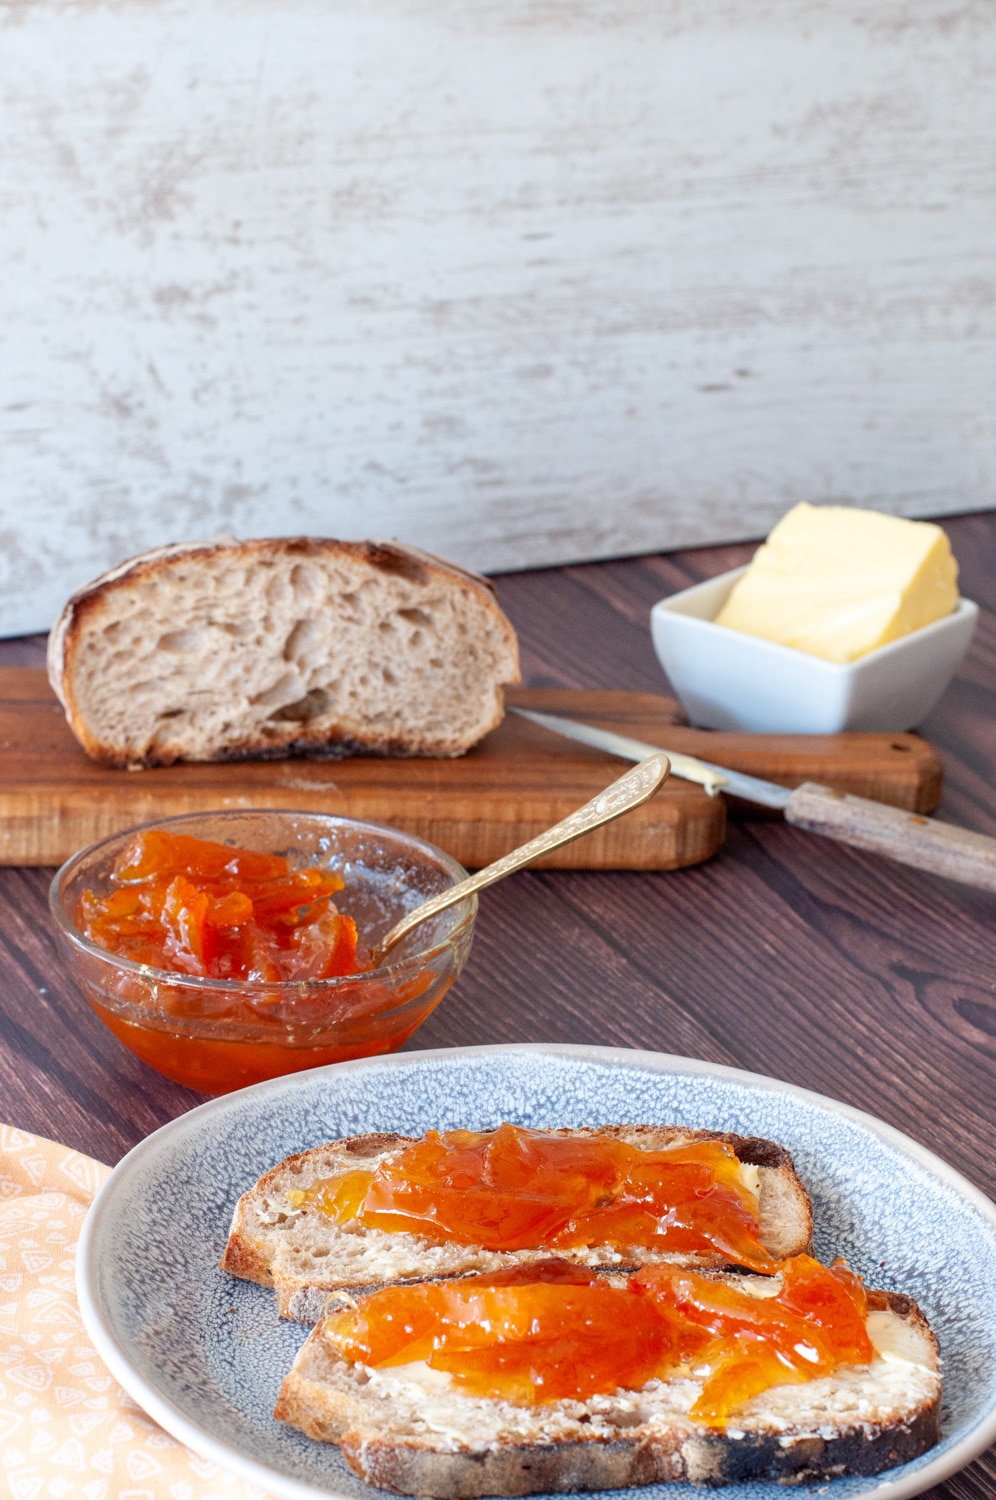 bitter orange marmalade over a piece of bread